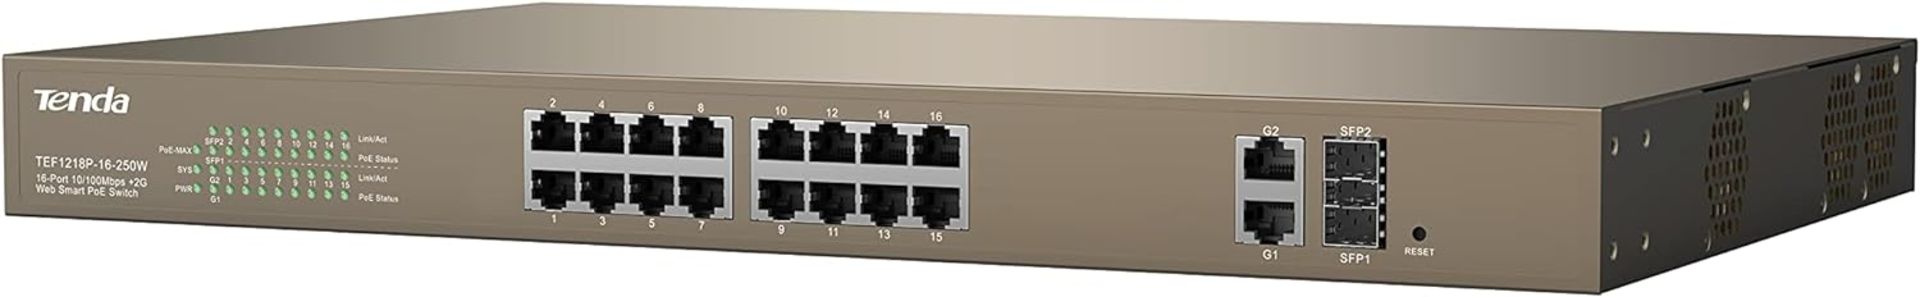 NEW & BOXED TENDA TEF1218P-16-250W 16-Port 10/100 PoE/2-Port Gigabit/2-Port SFP Web Smart Switch. - Image 2 of 3